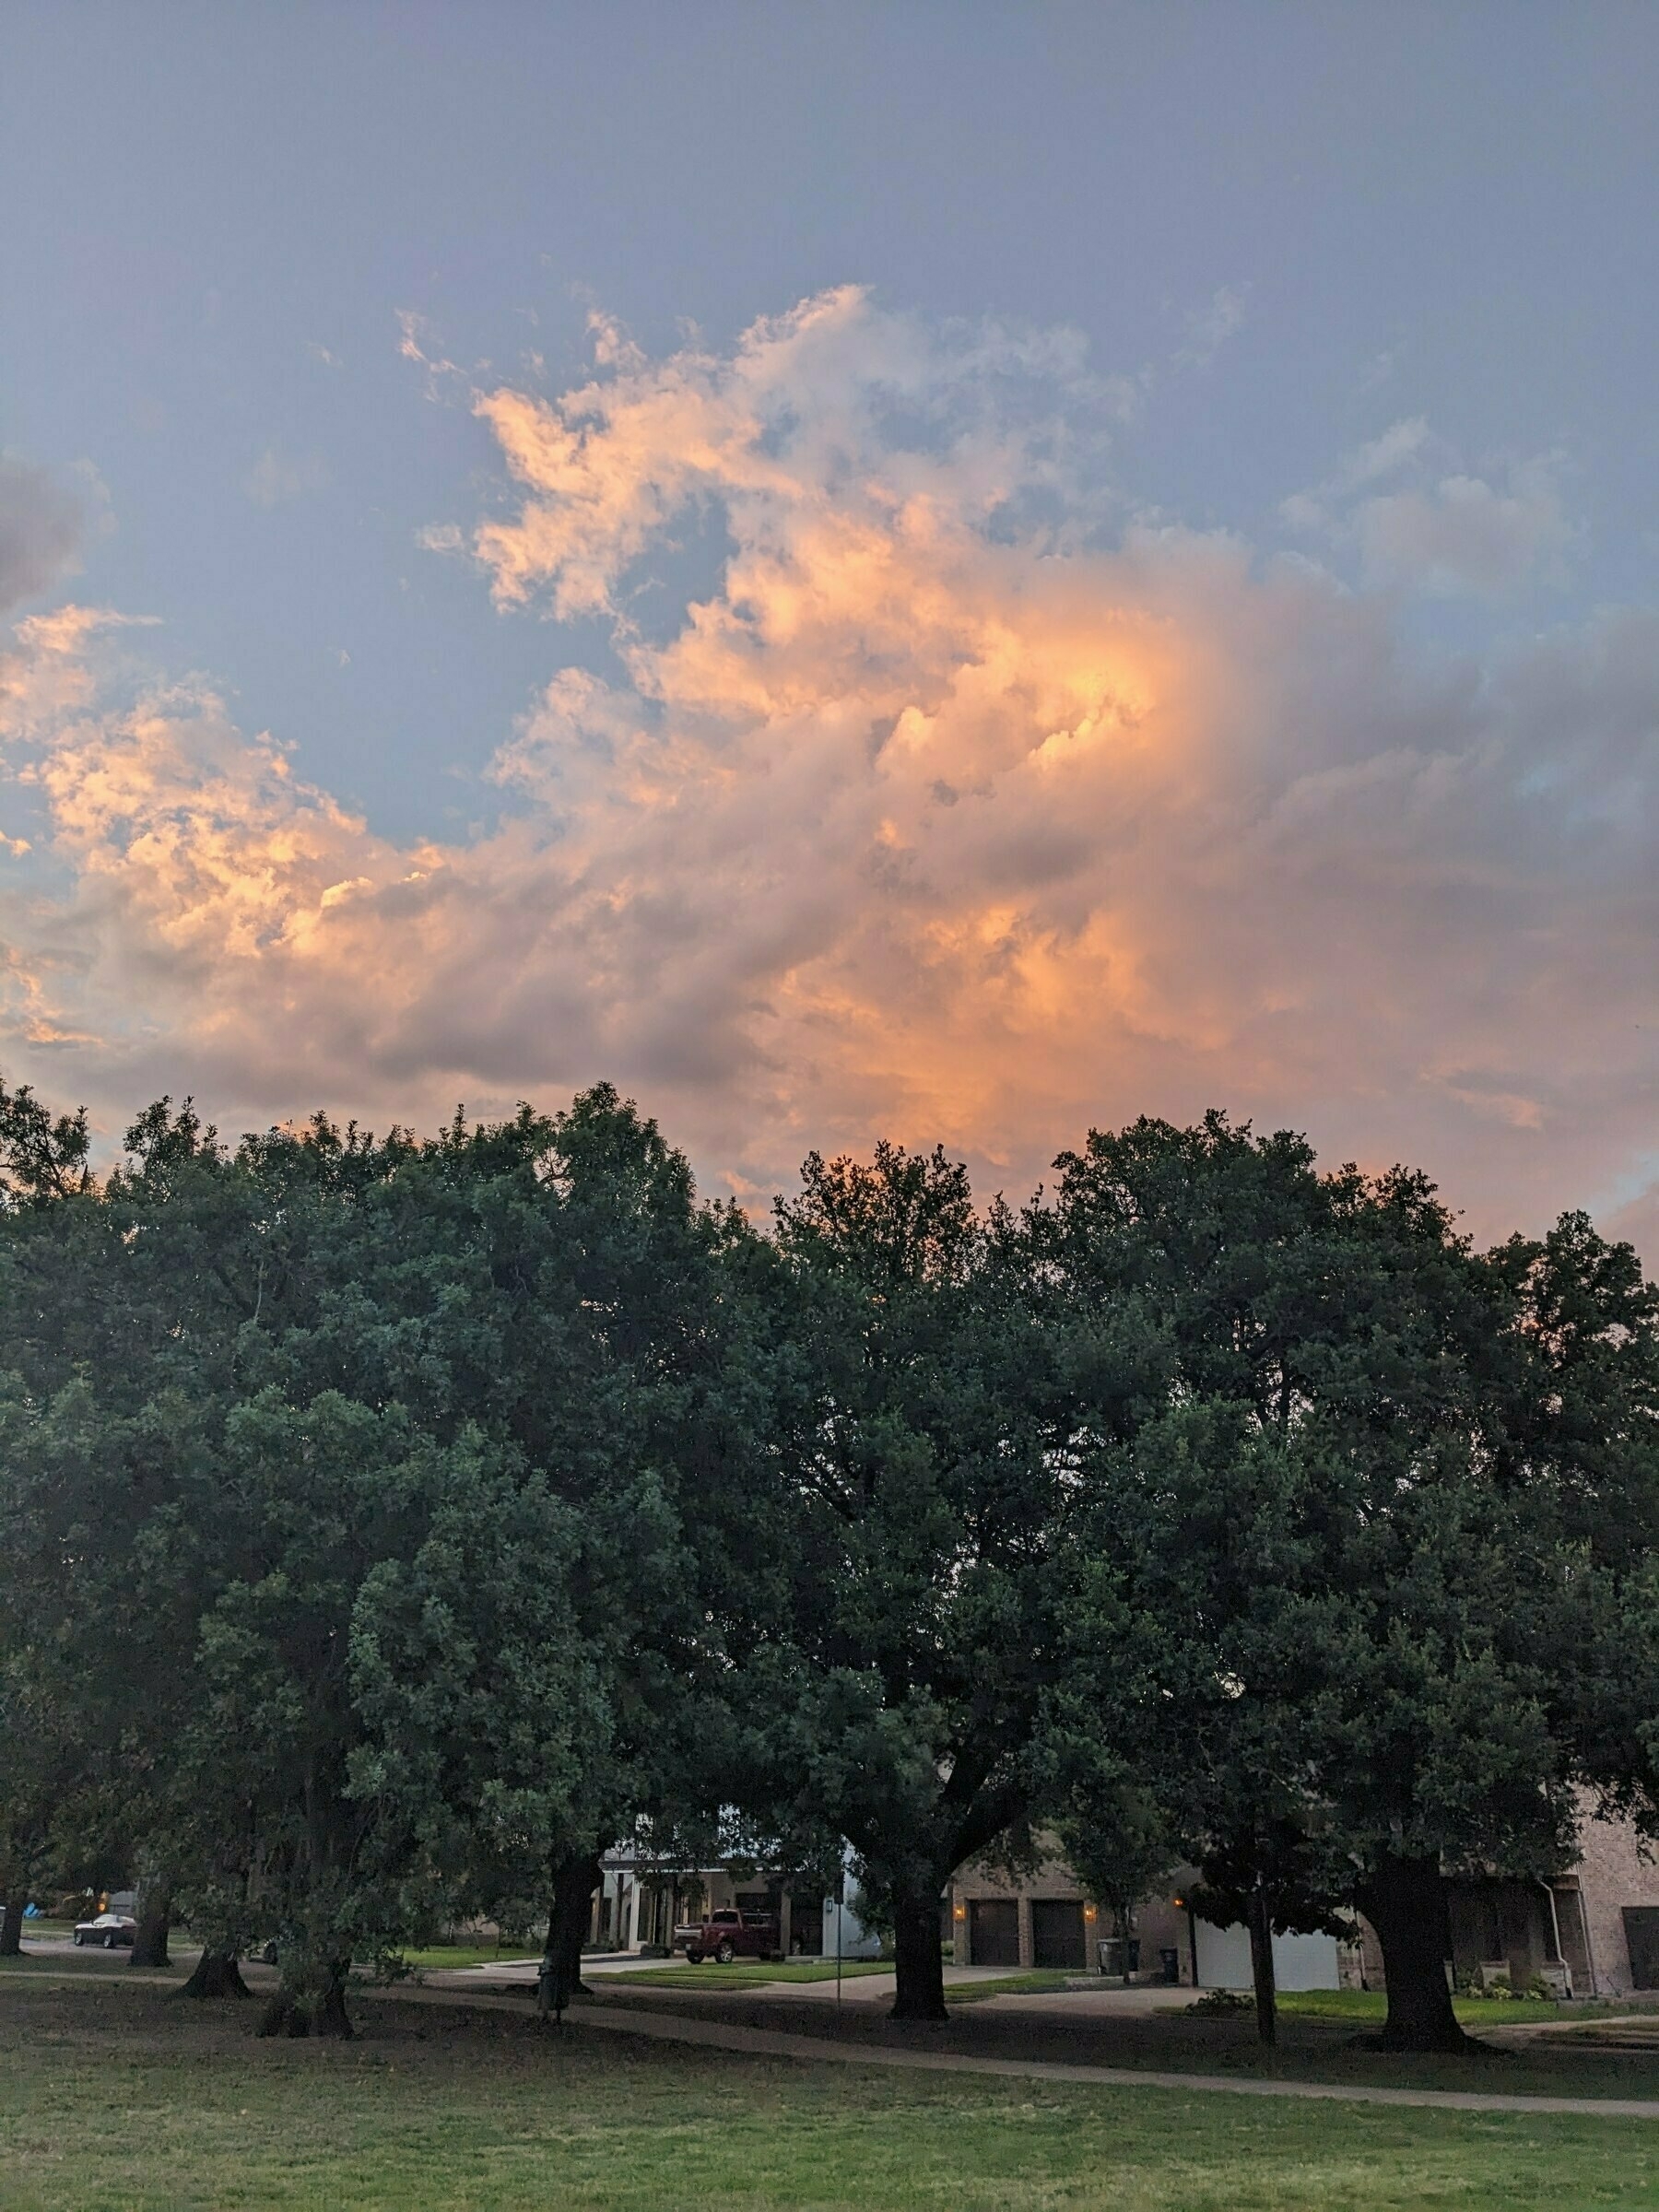 sunrise on clouds, Dallas TX USA